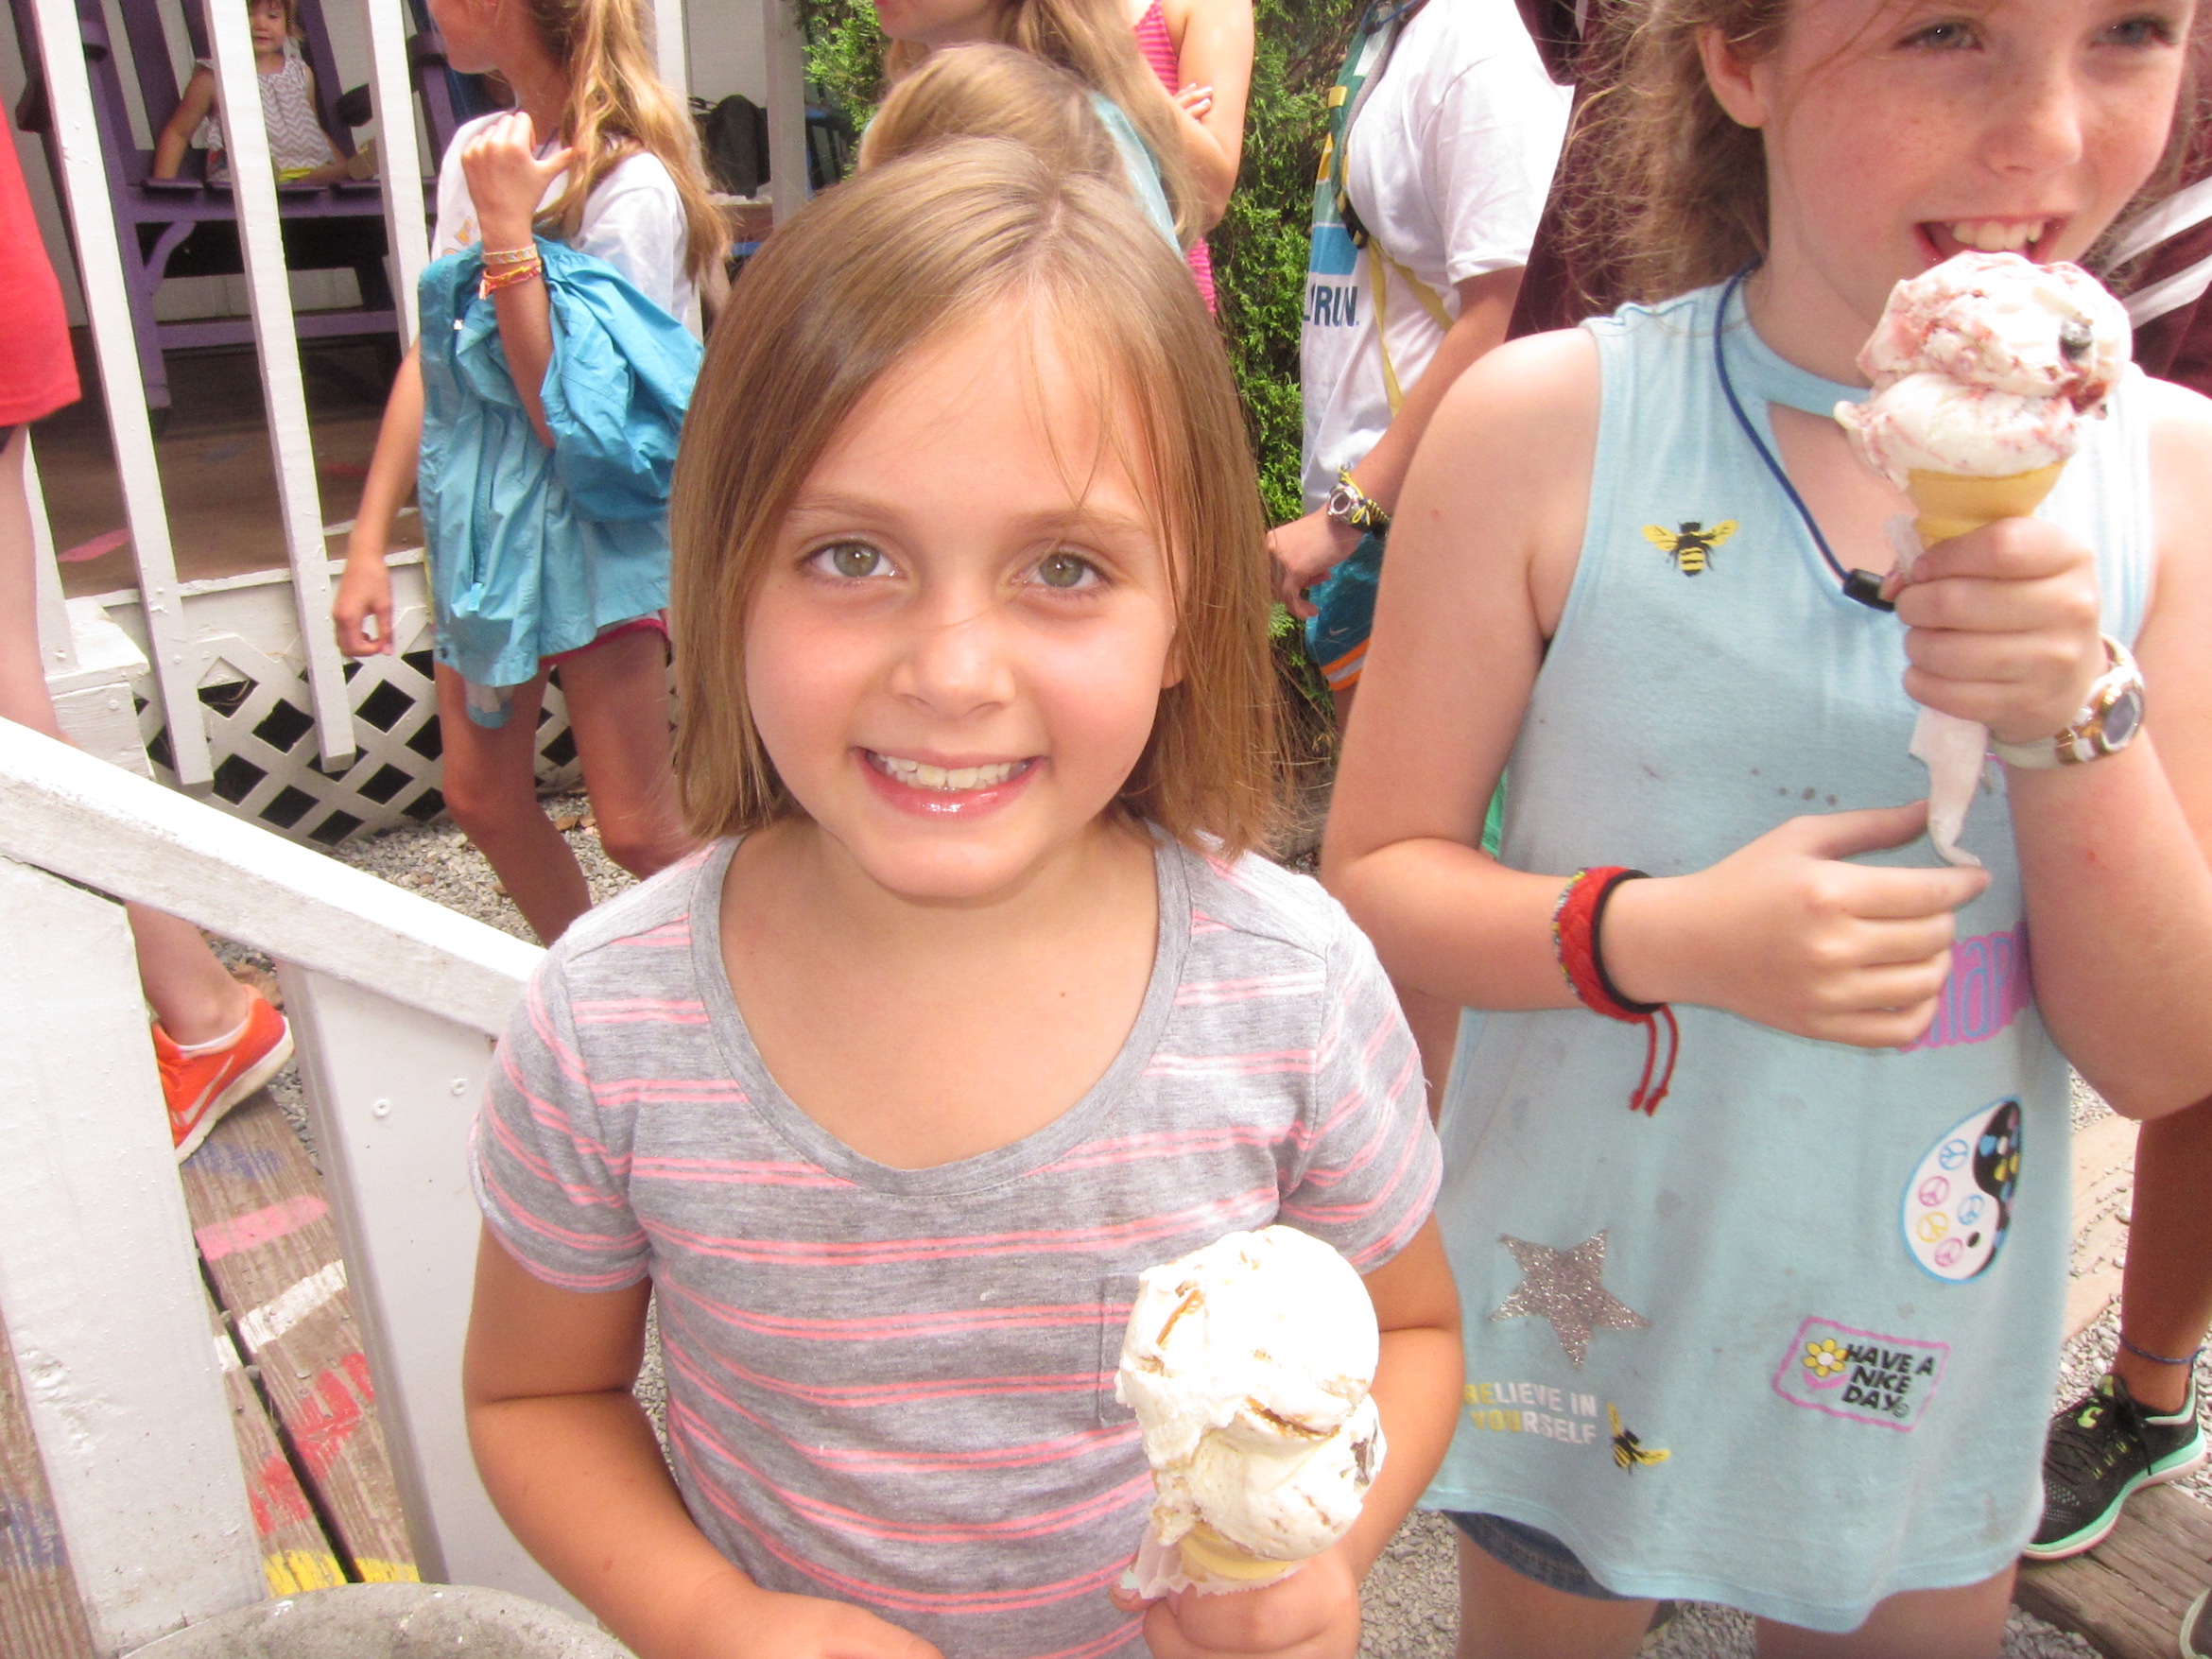 child with ice cream cone